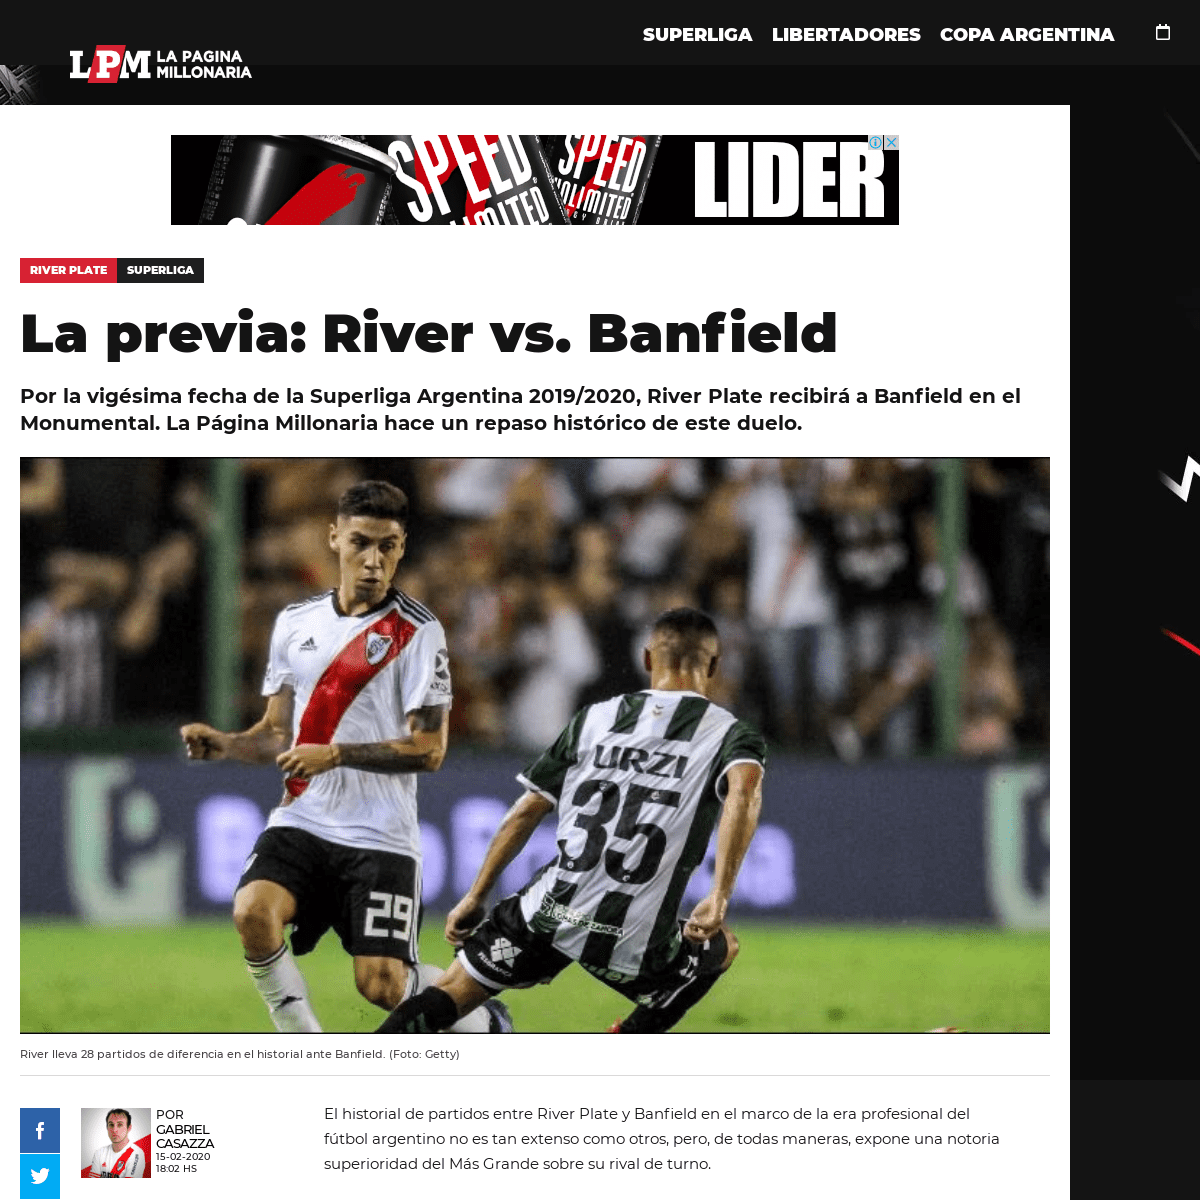 A complete backup of lapaginamillonaria.com/riverplate/Previa-Historial-River-Plate-vs-Banfield-Superliga-Argentina-2019-2020-20